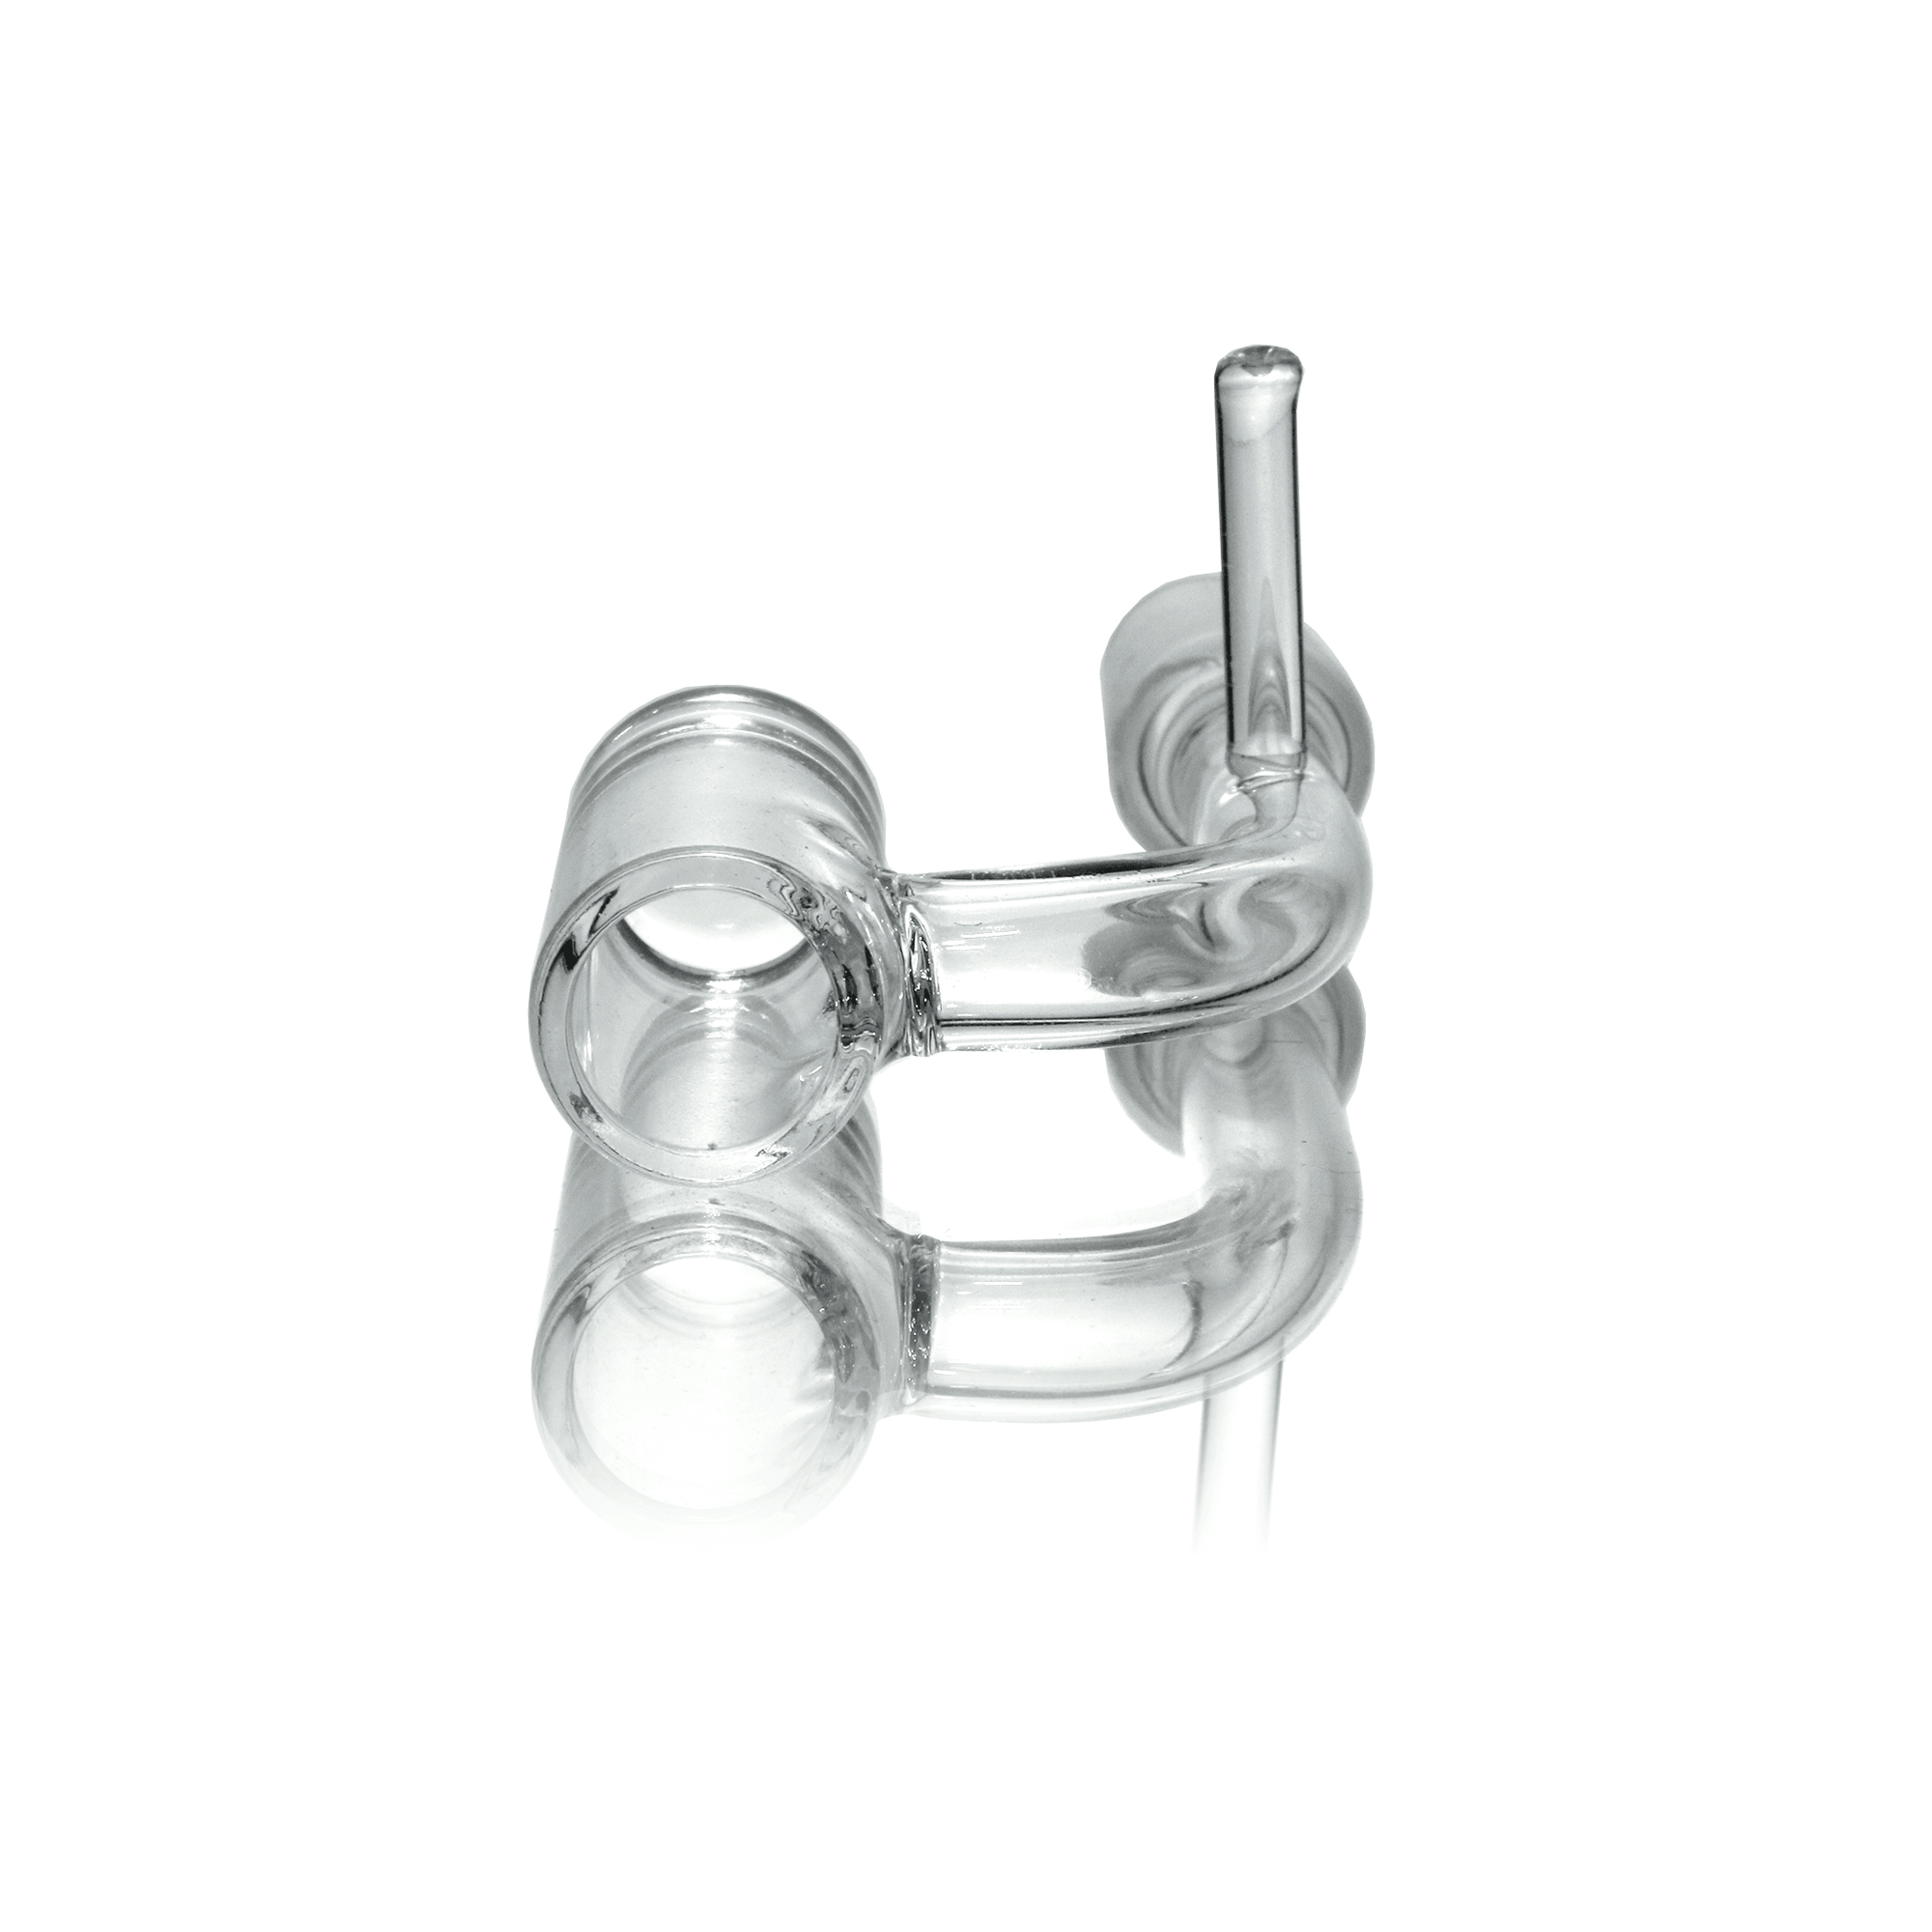 Portable Dabbing Kit | Showerhead Bubbler & 14mm Male E-Banger | E-Banger Prone View | TDS